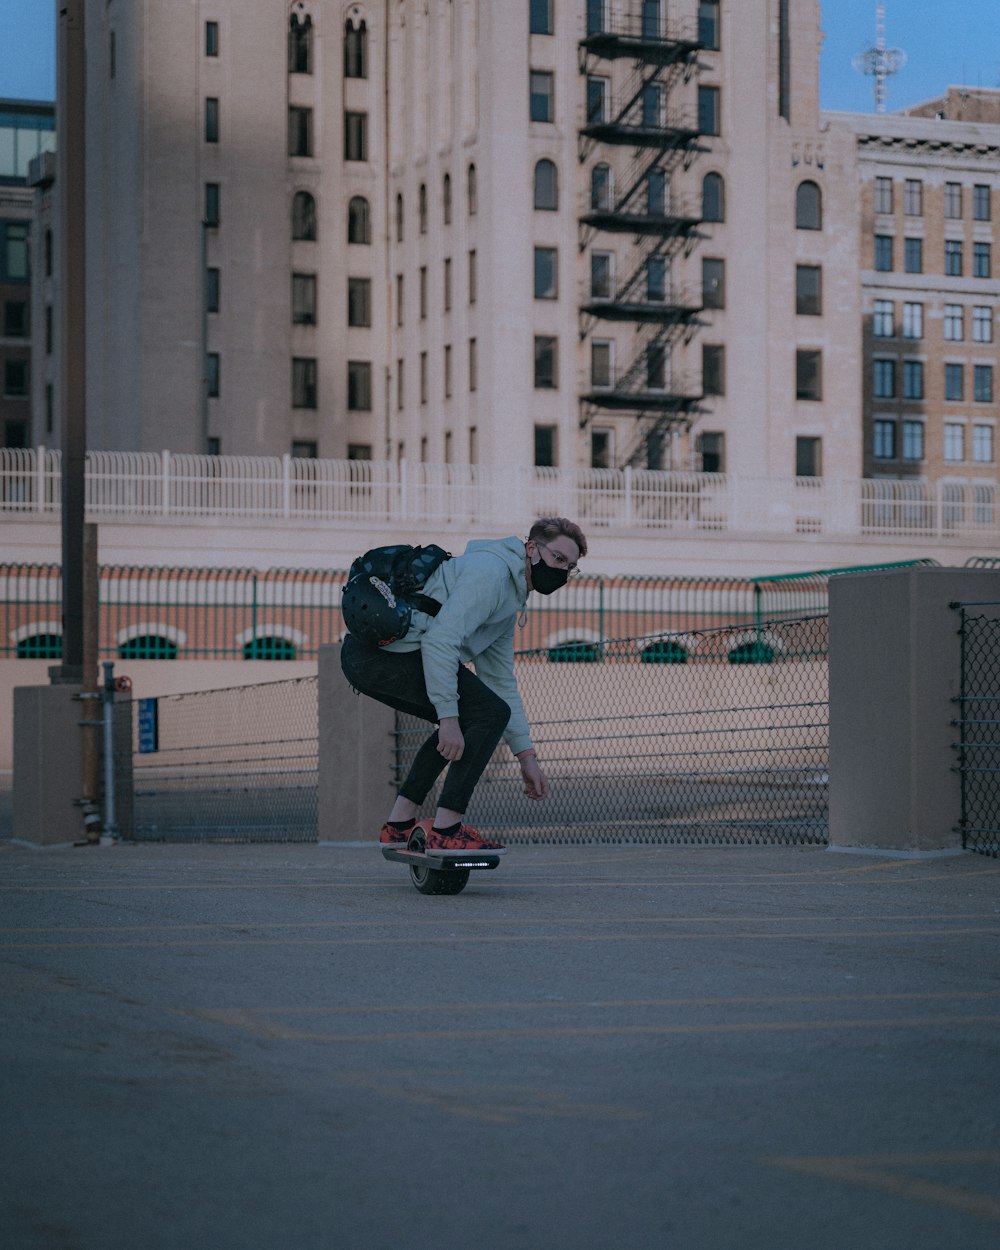 man in gray jacket riding on black skateboard during daytime